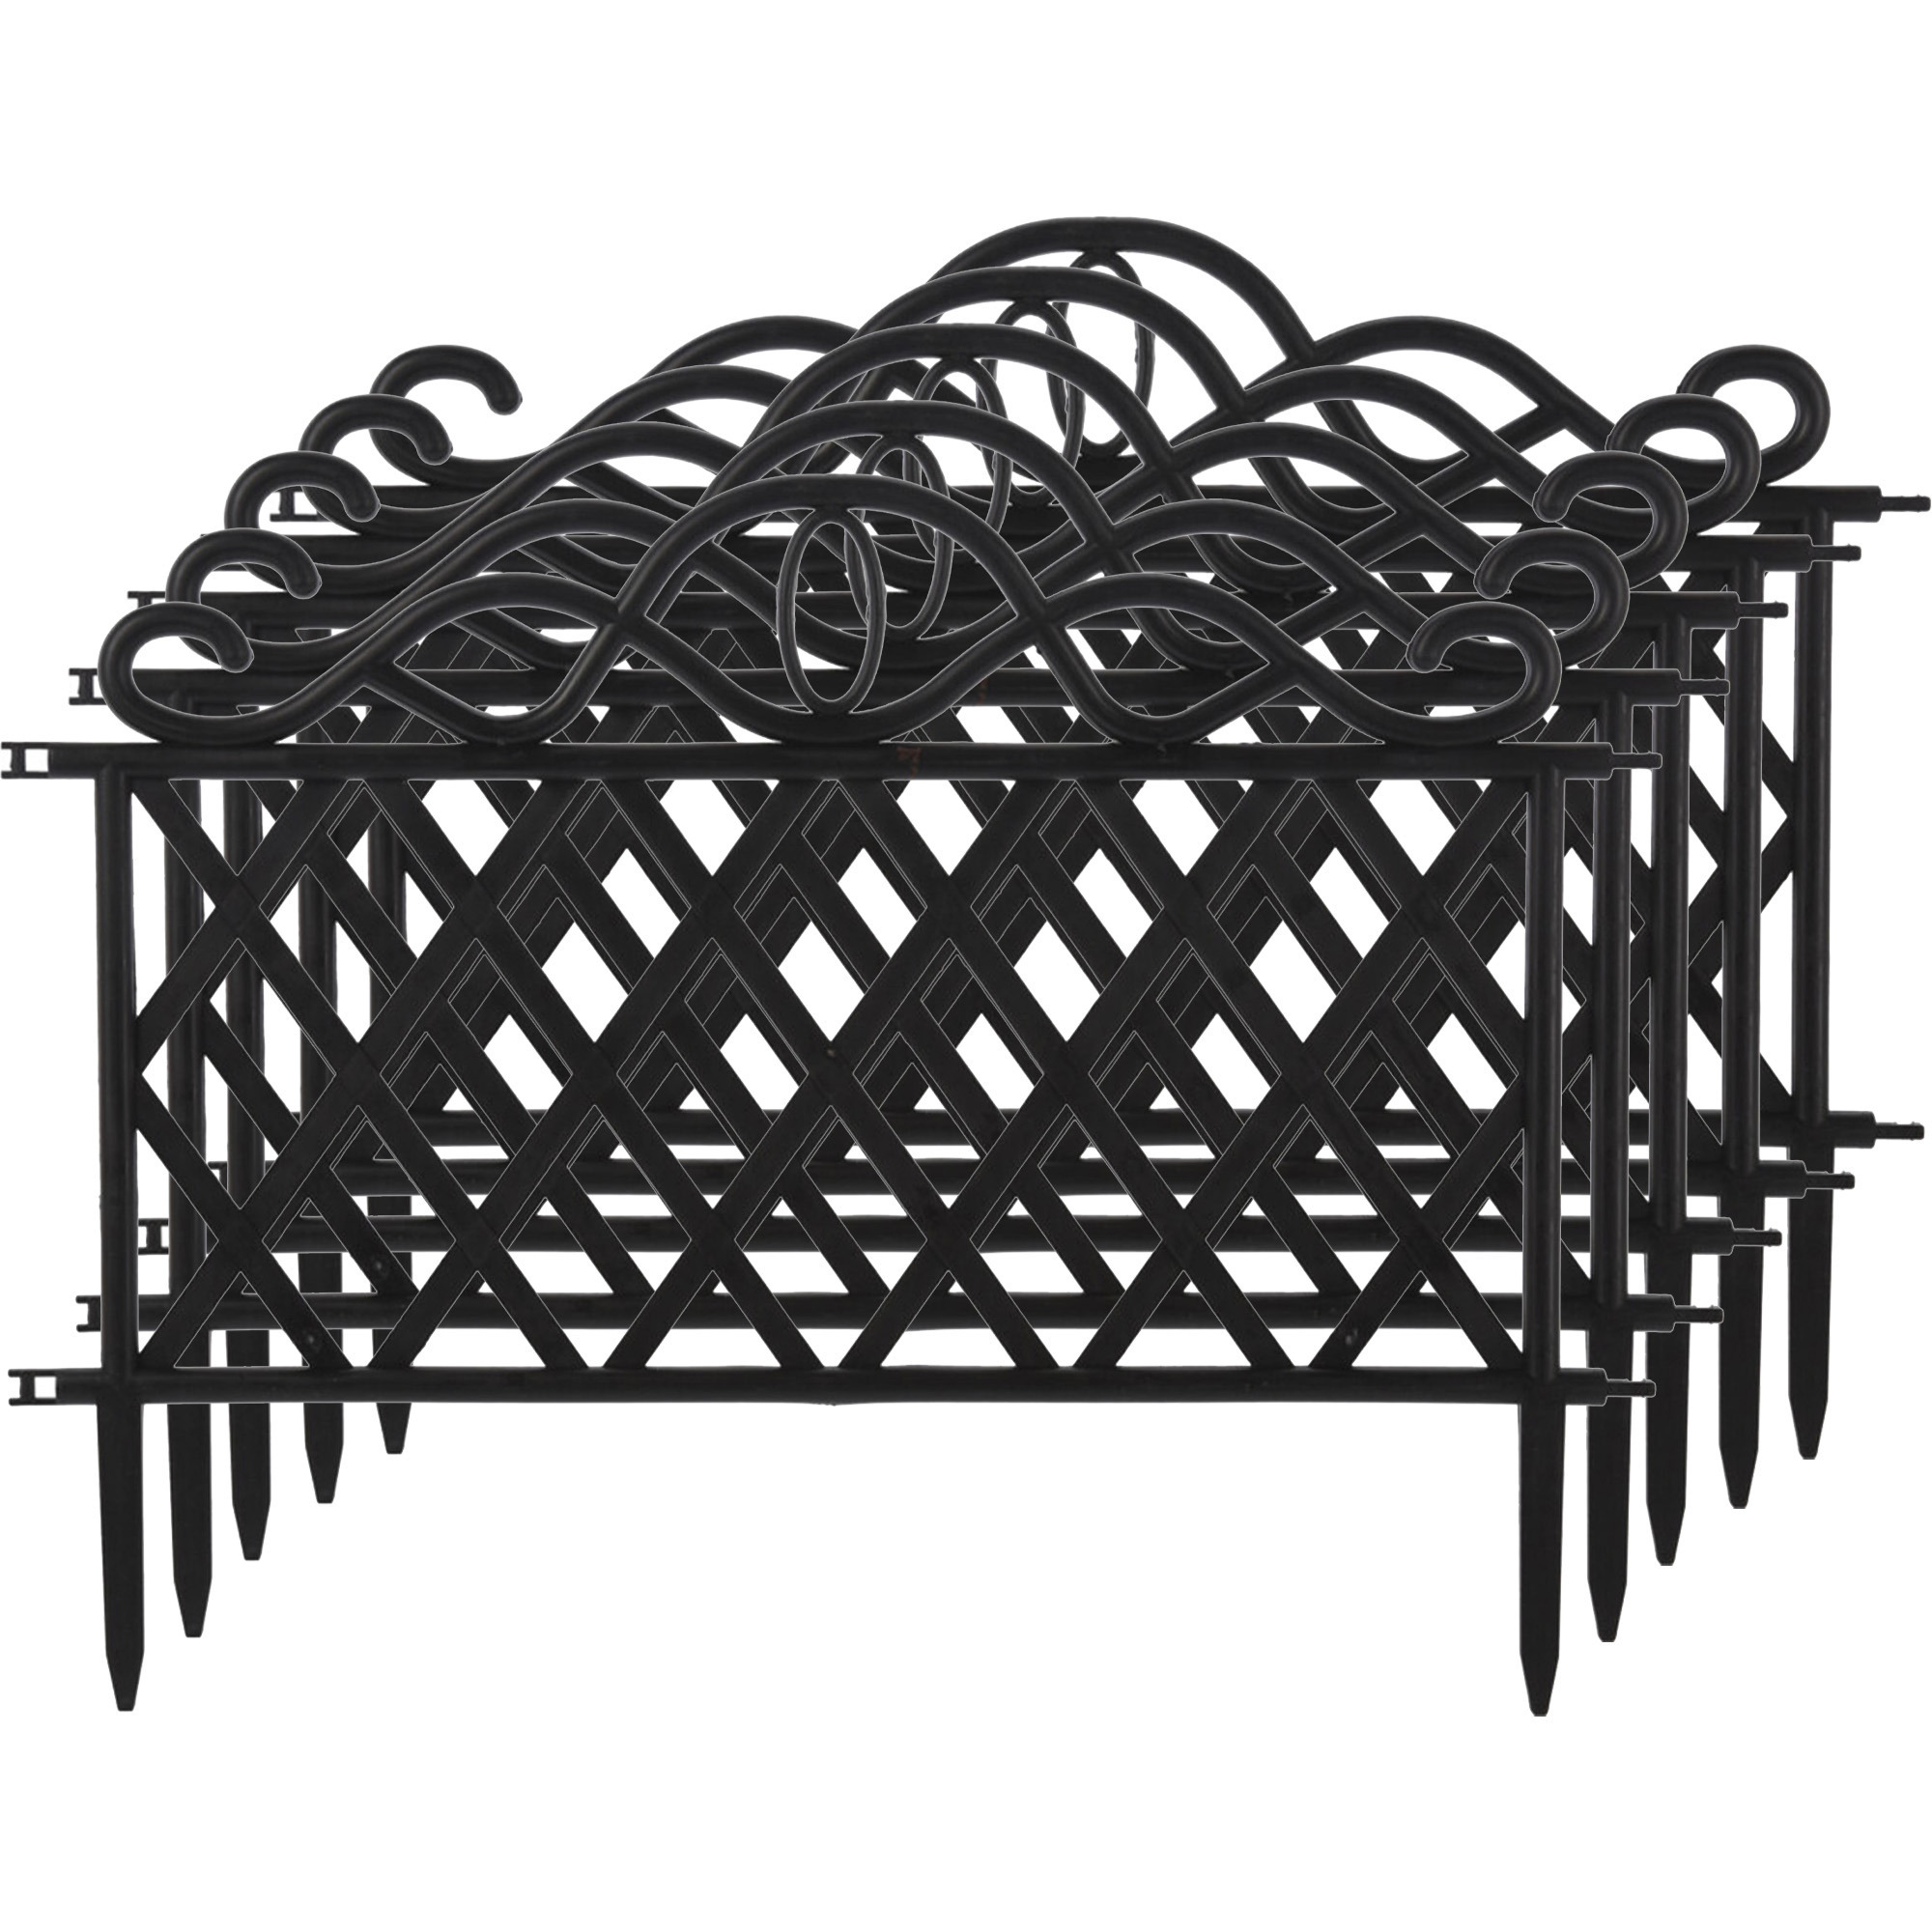 Tuinhekjes 10x stuks kunststof 48 x 34 cm zwart borderrand tuinafscheiding